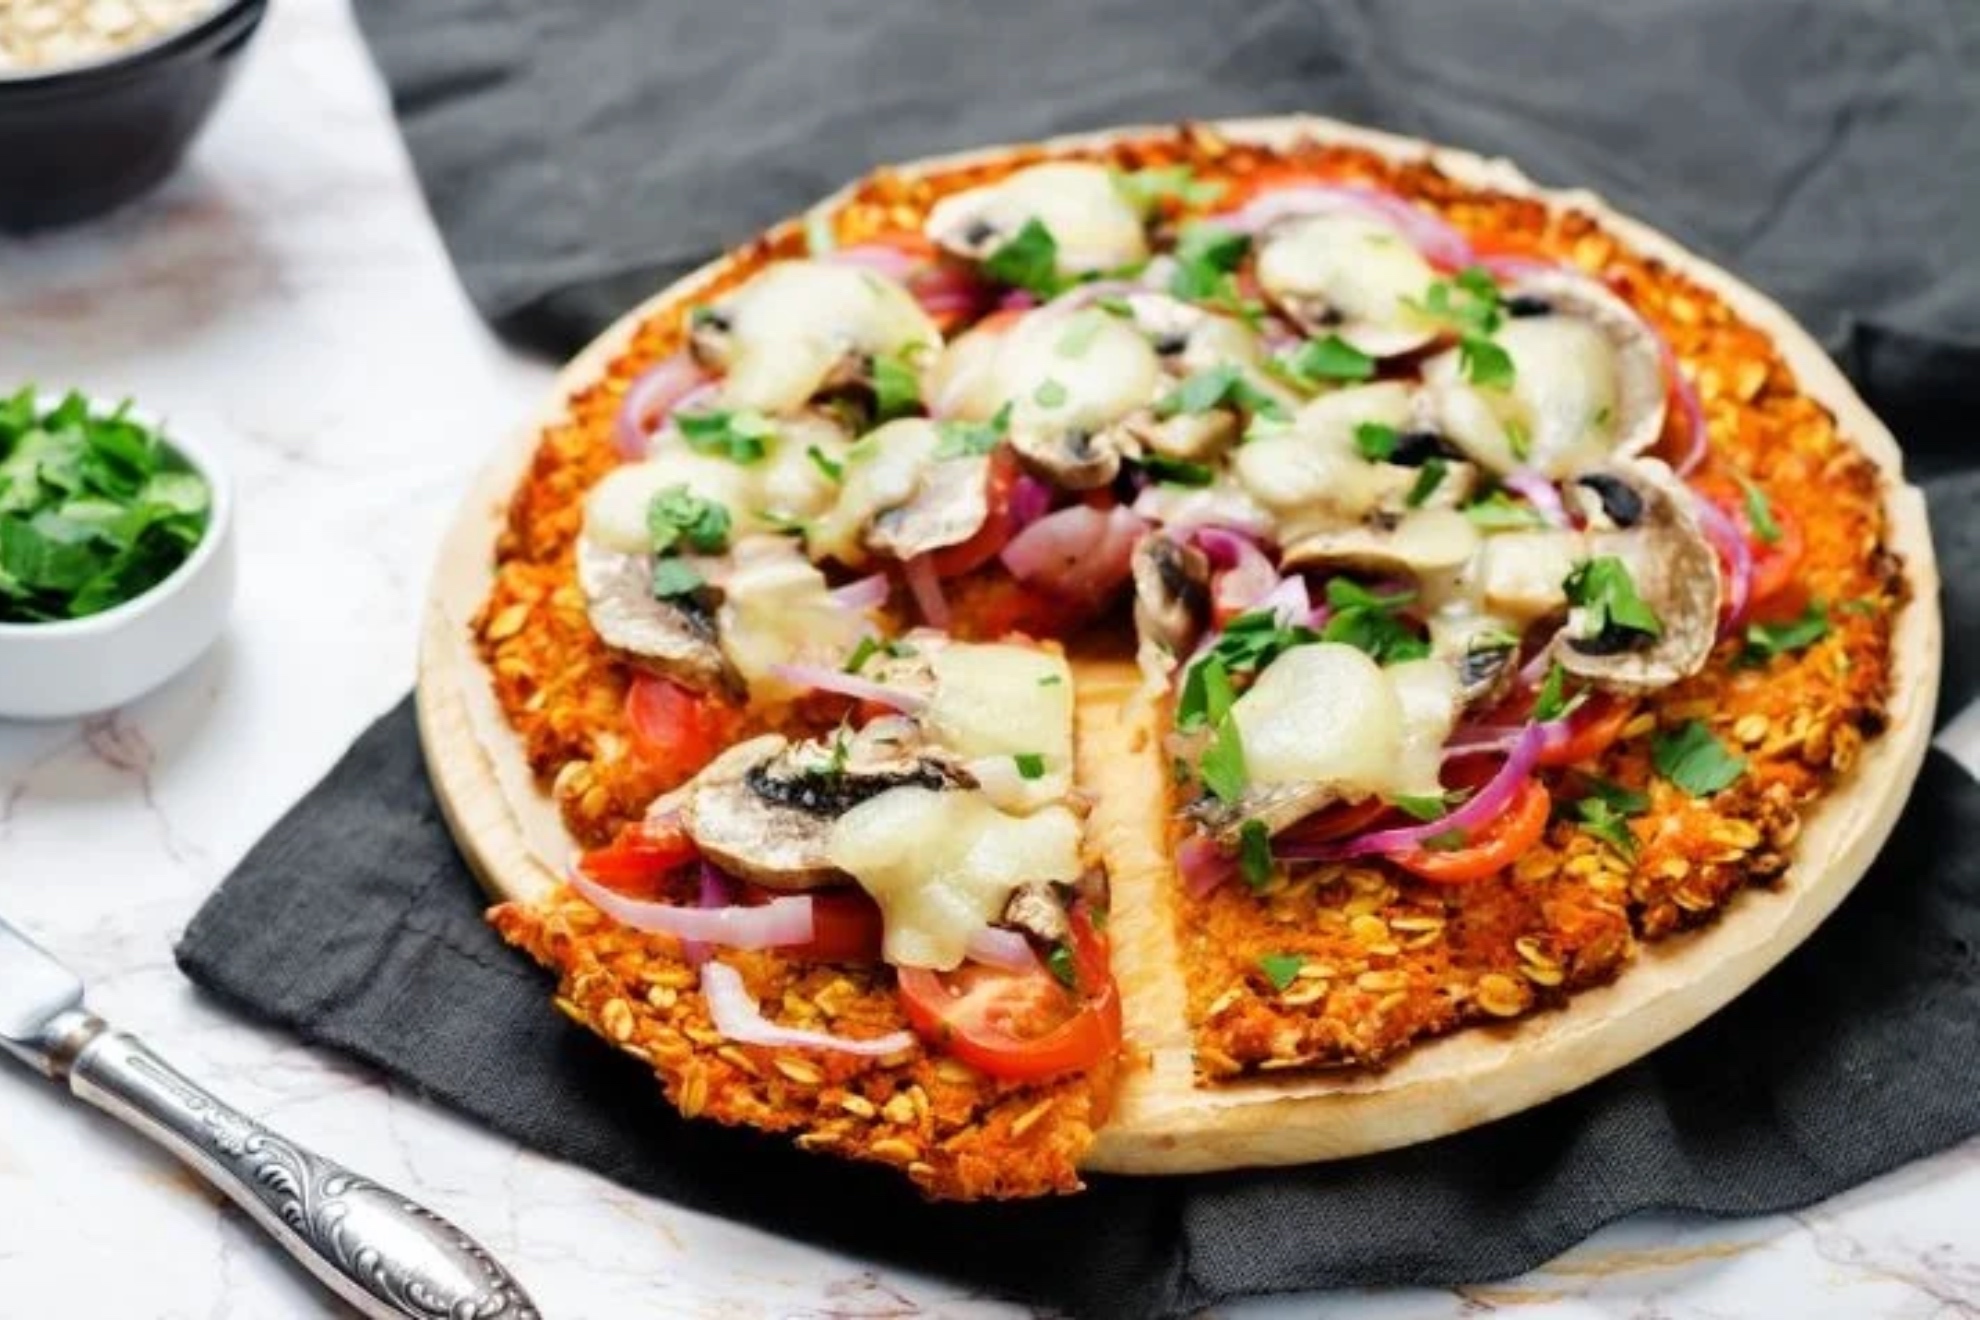 Así es la pizza fitness perfecta para después de entrenar e incluir en tu dieta habitual